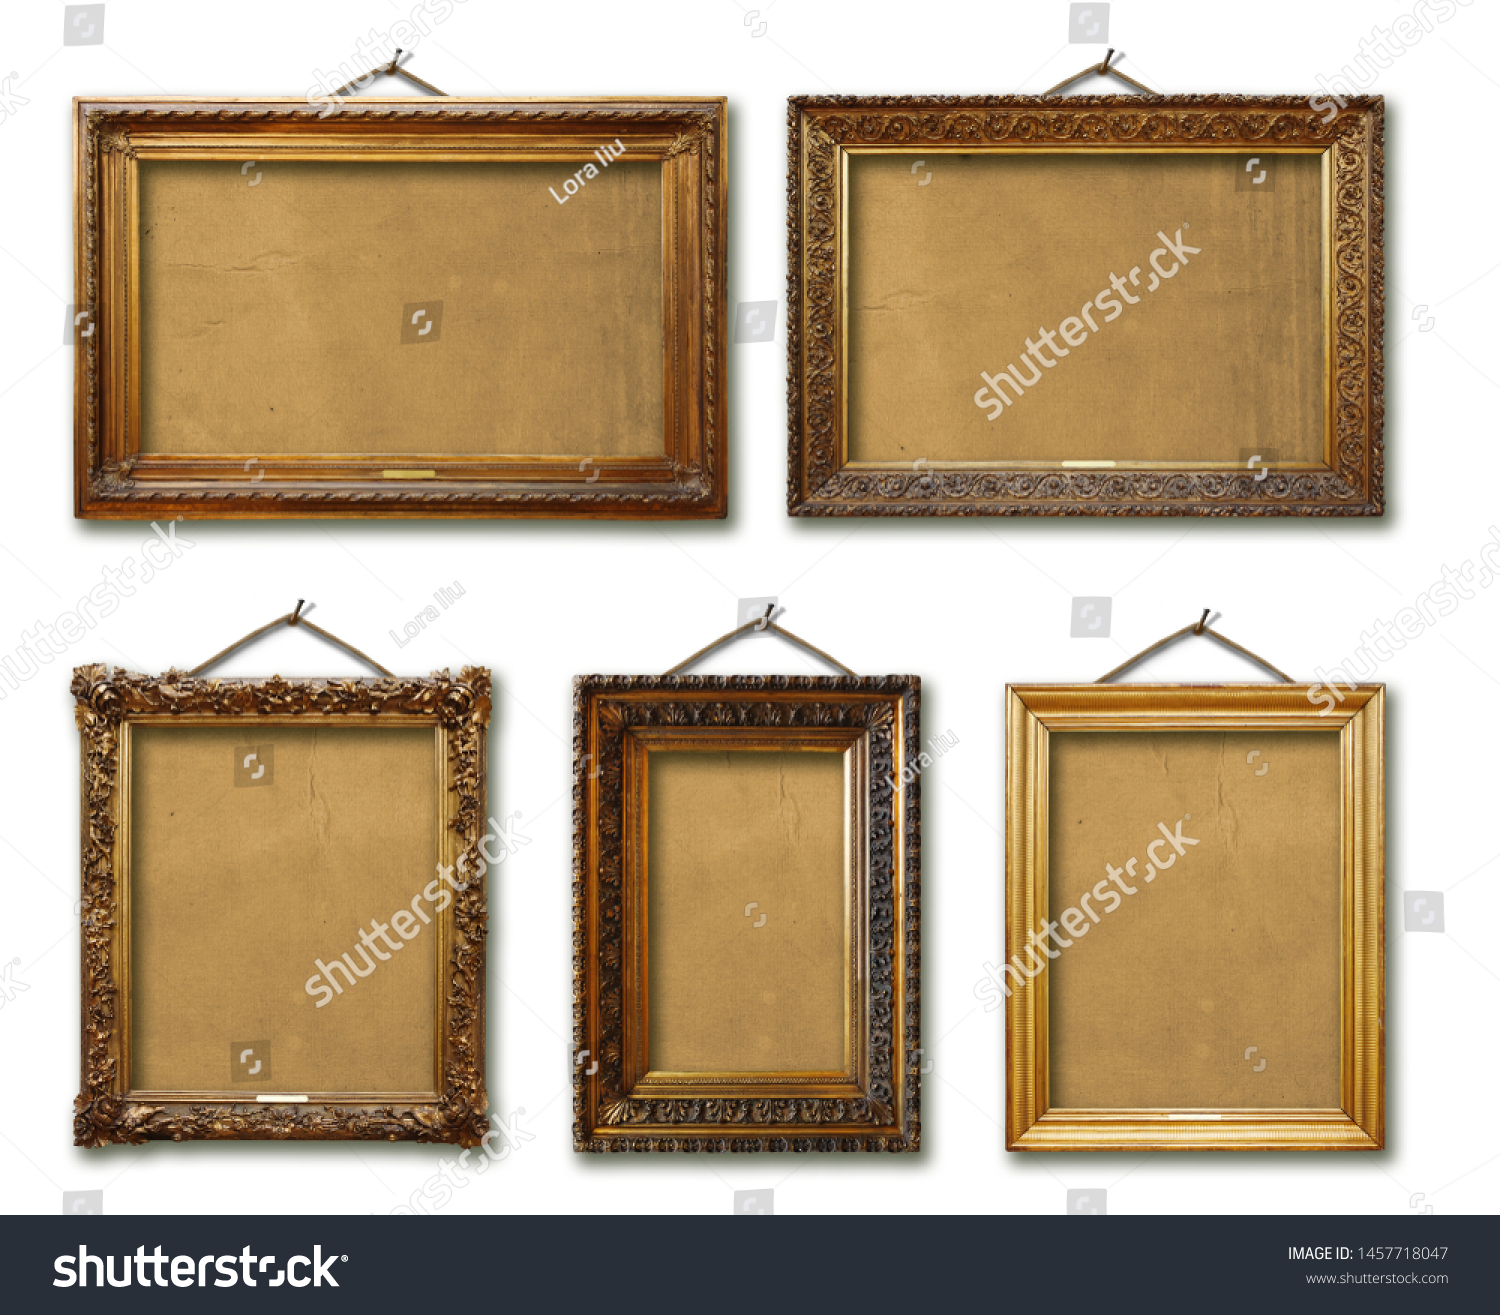 Vintage Wooden Photo Frames set of three.